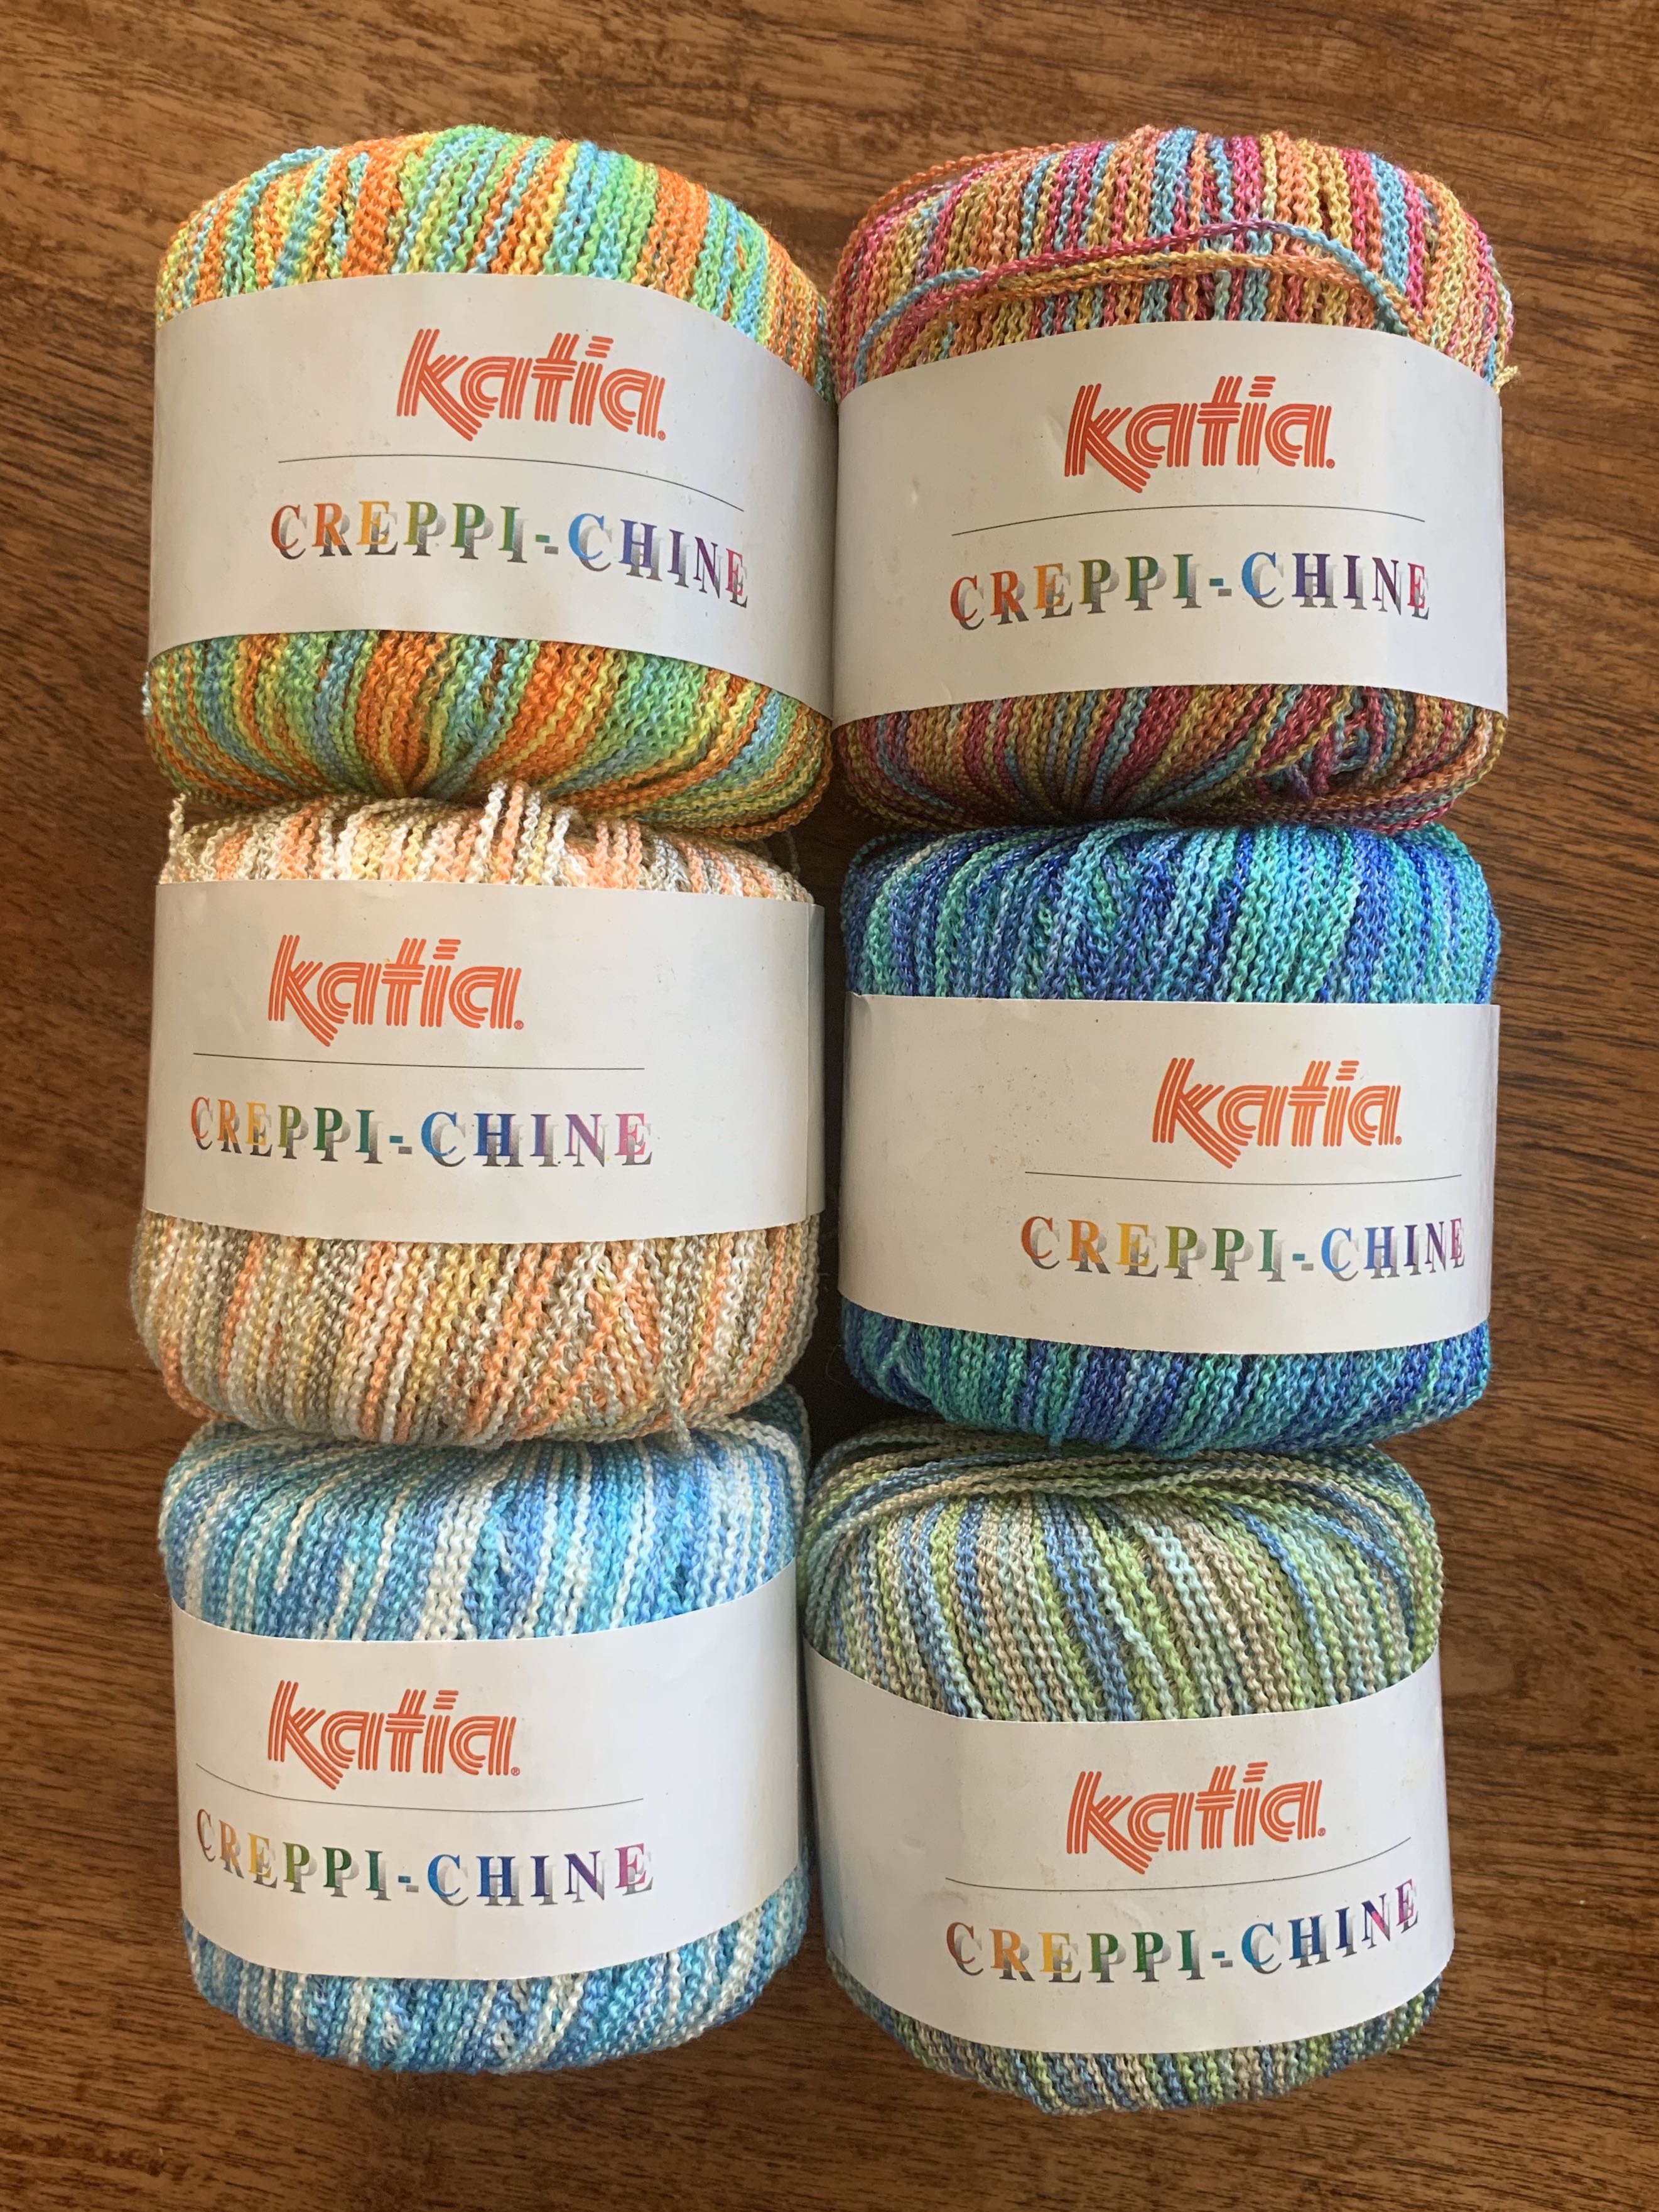 high quality yarn for knitting